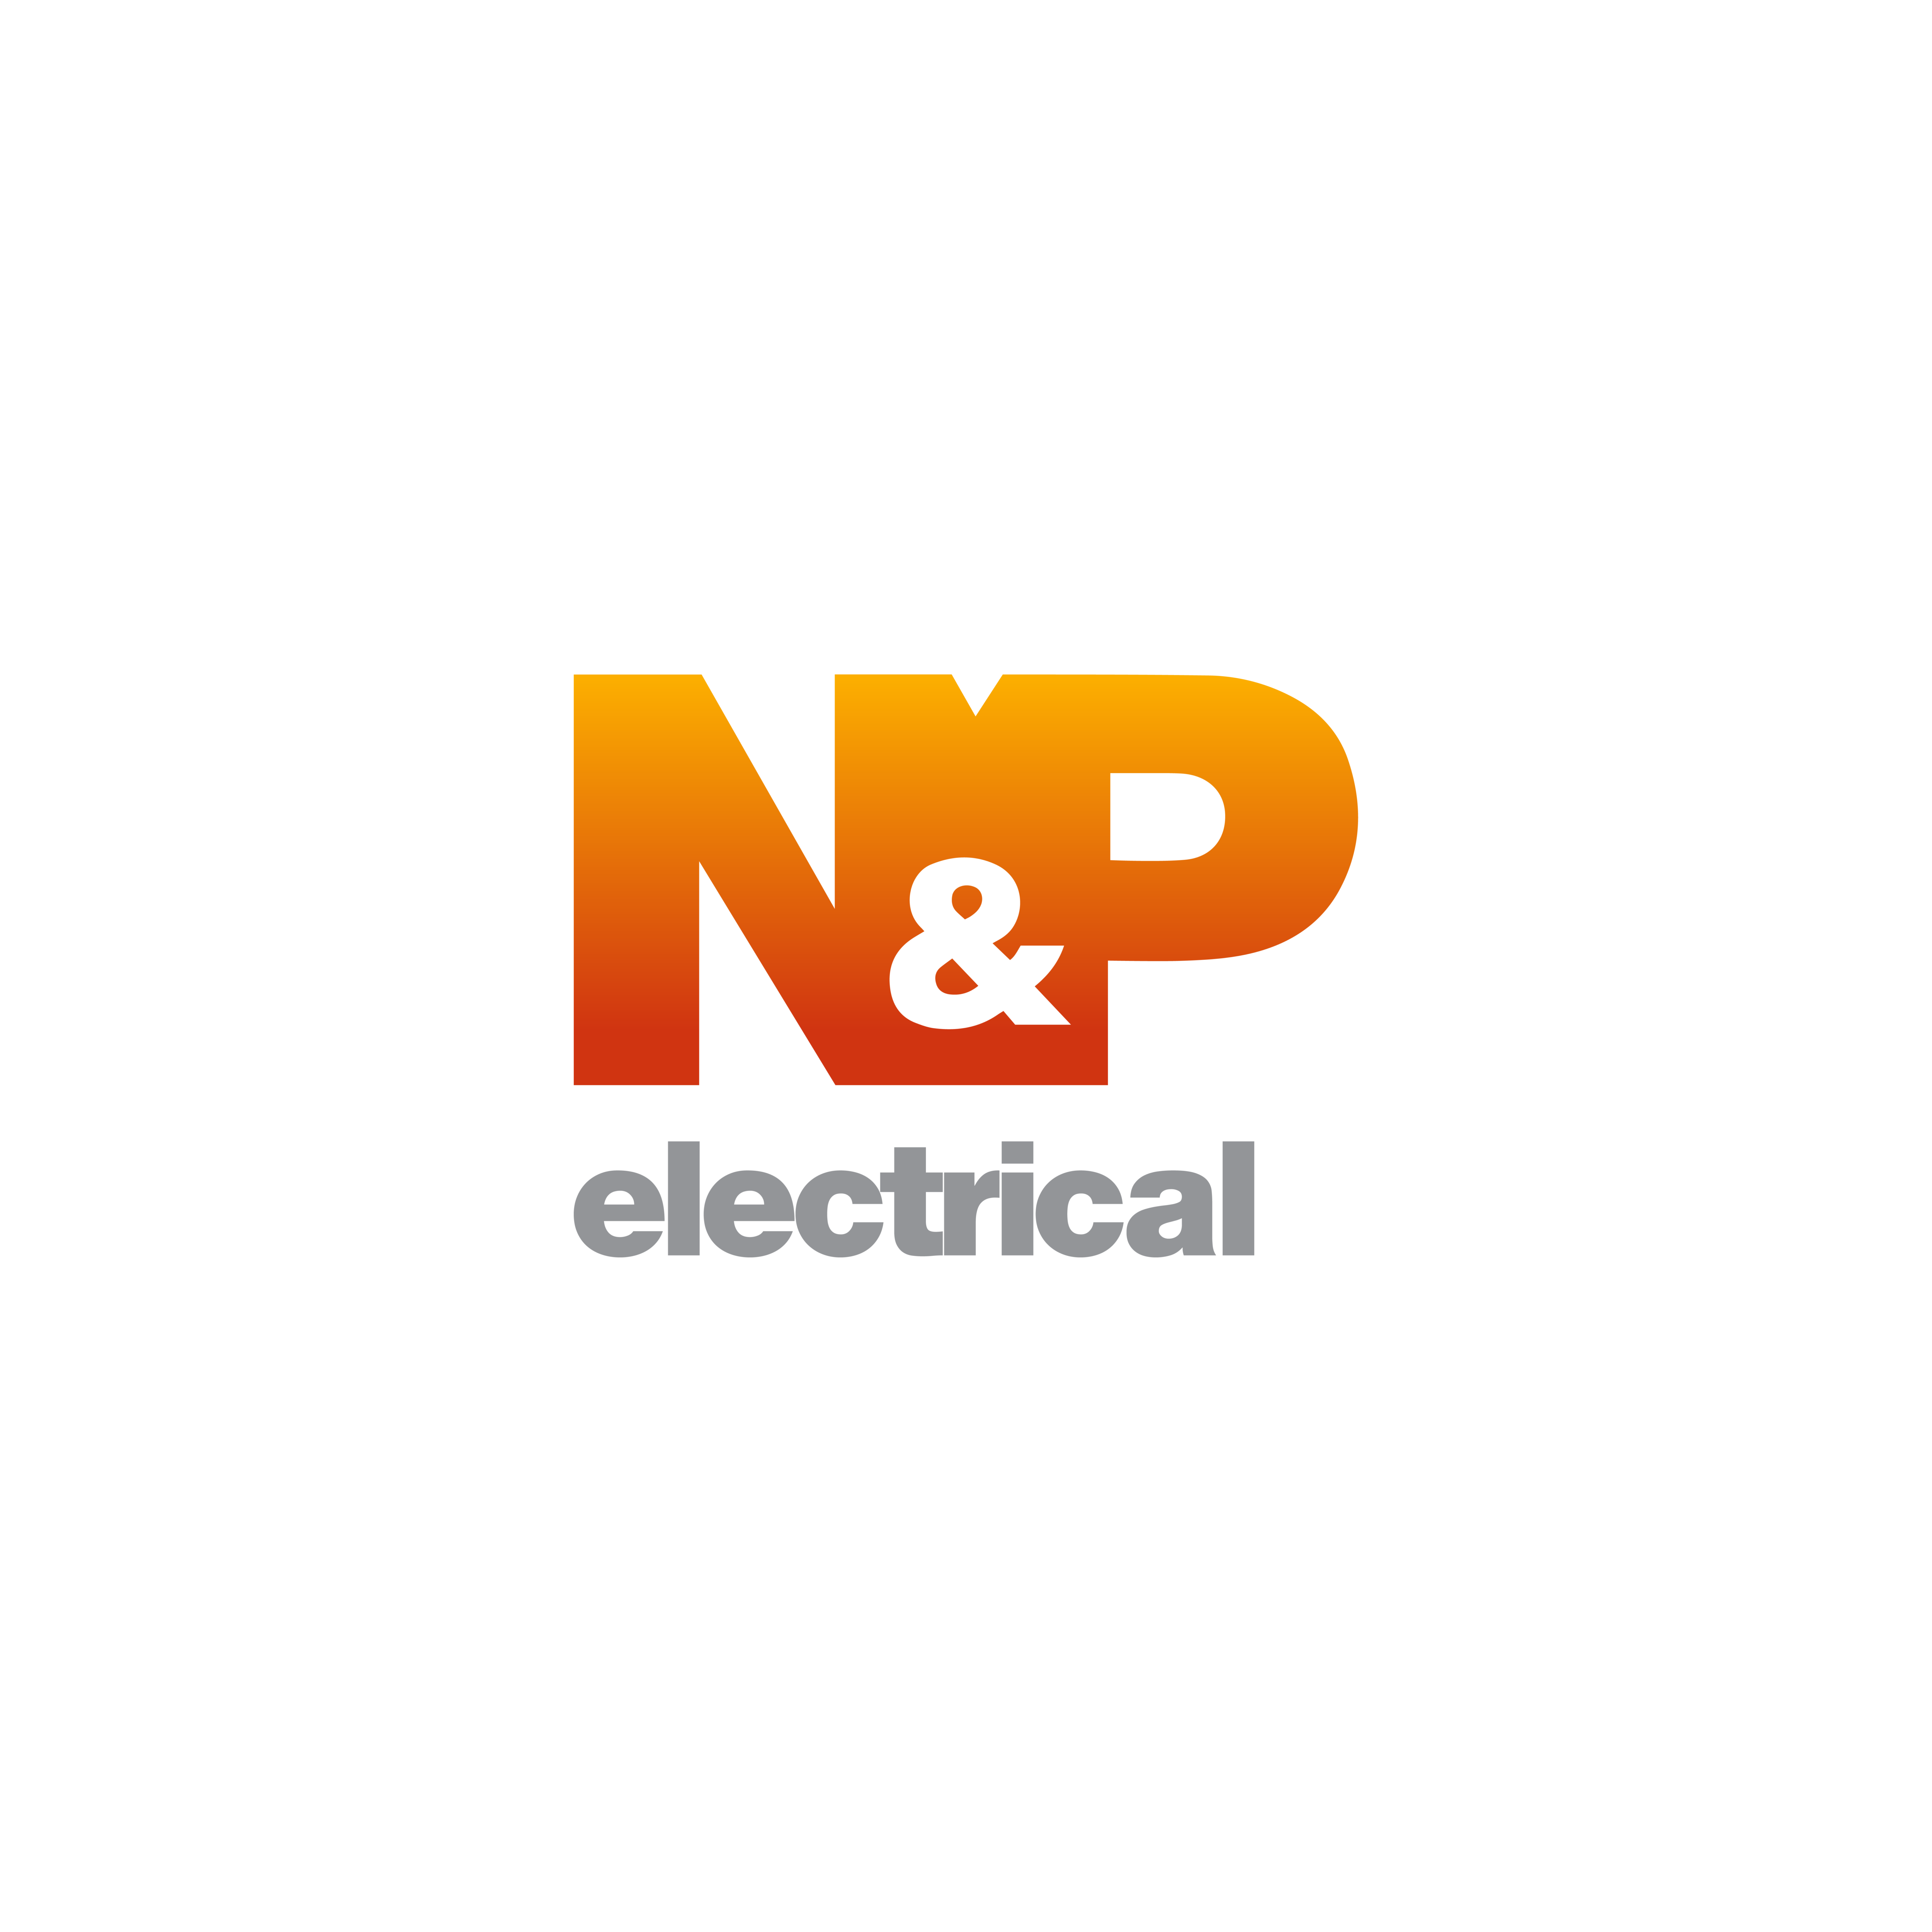 N&P electrical logo -01